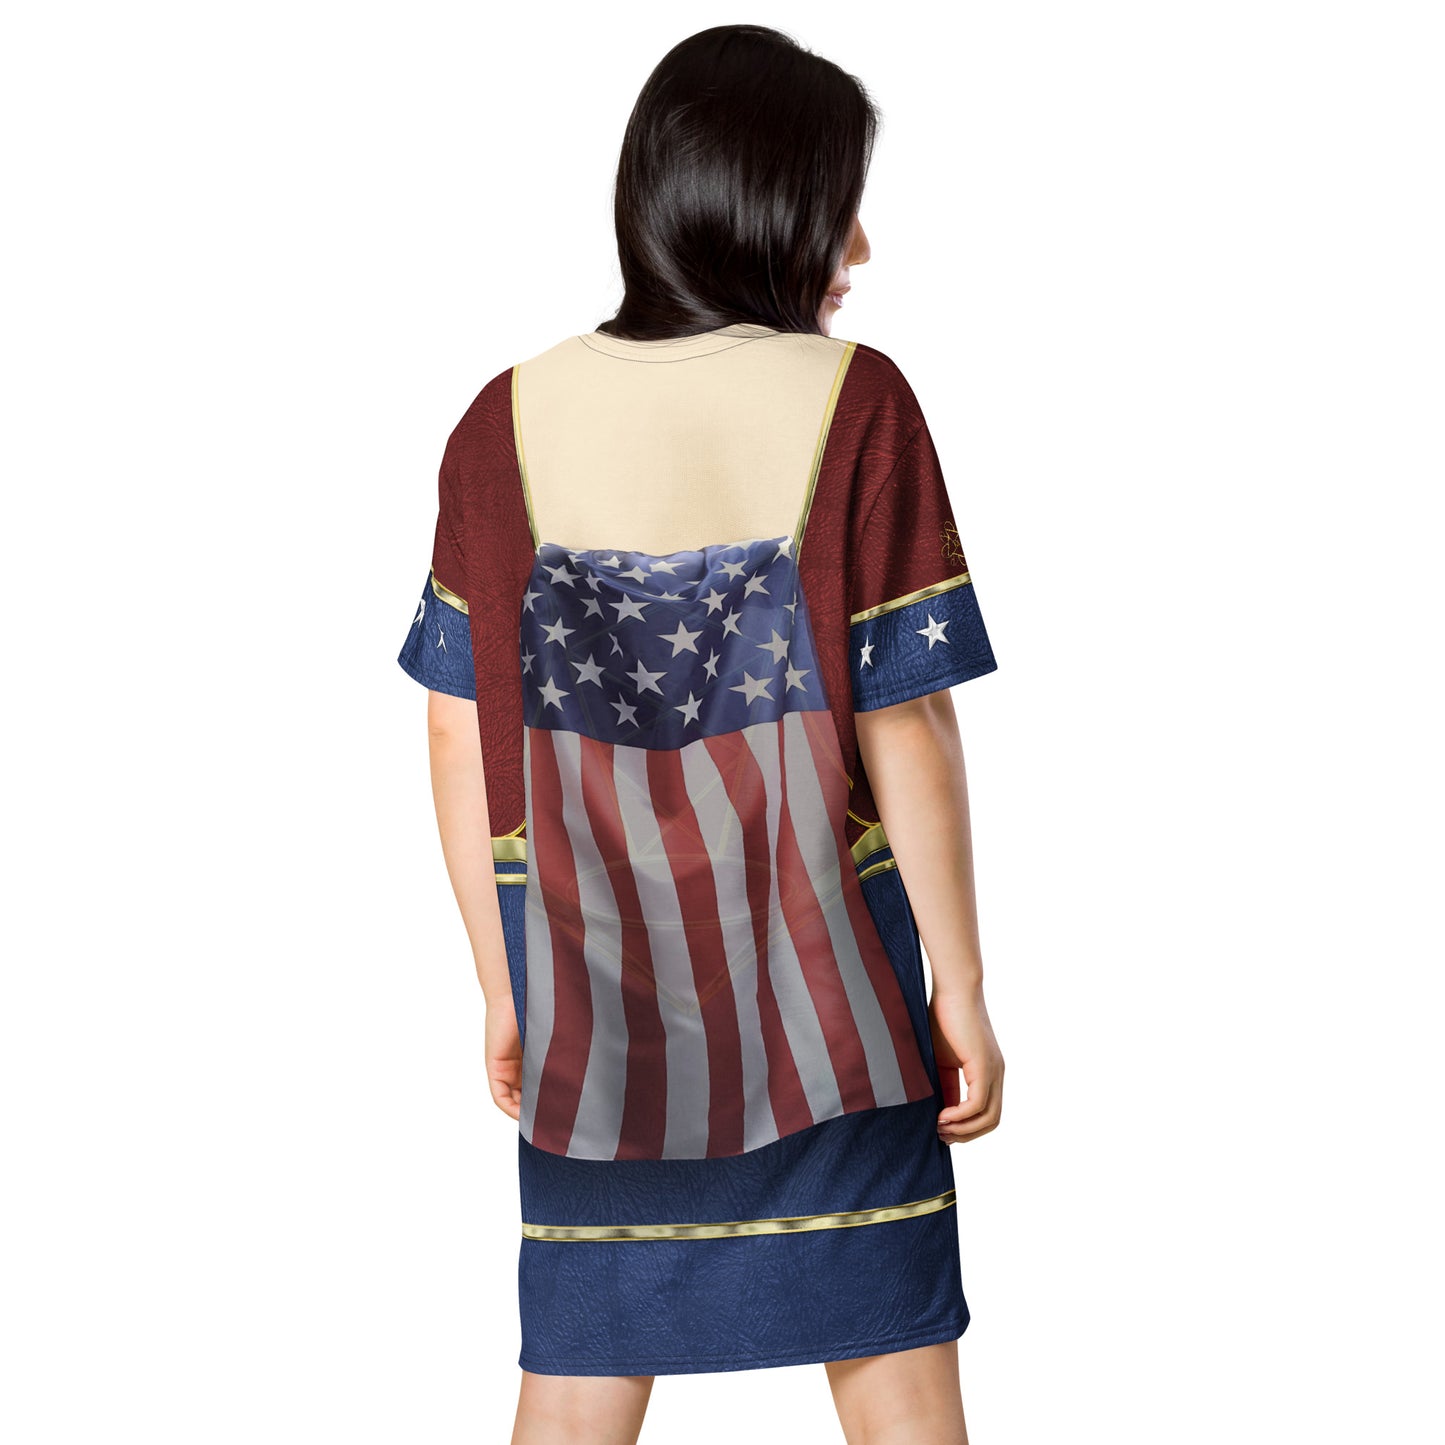 Pajamgeries T-shirt Dress - Super Woman - Hanami